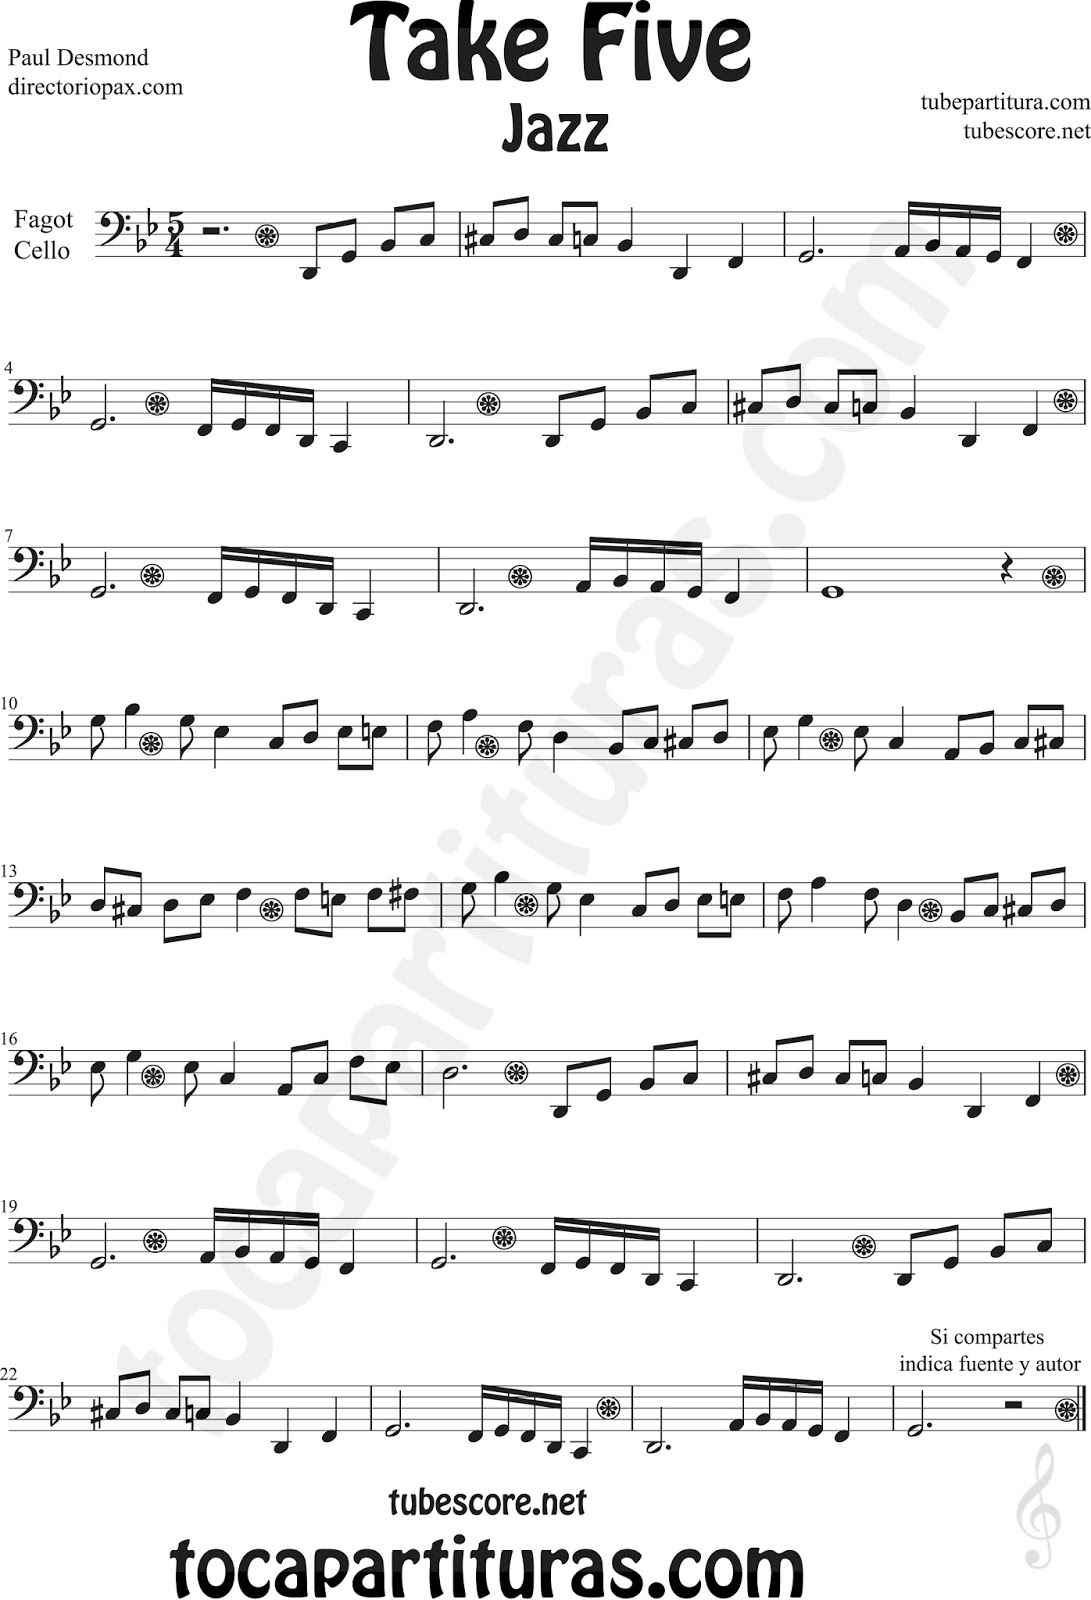 diegosax: Take Five de Paul Desmond Partitura de Saxofón, Trompeta.